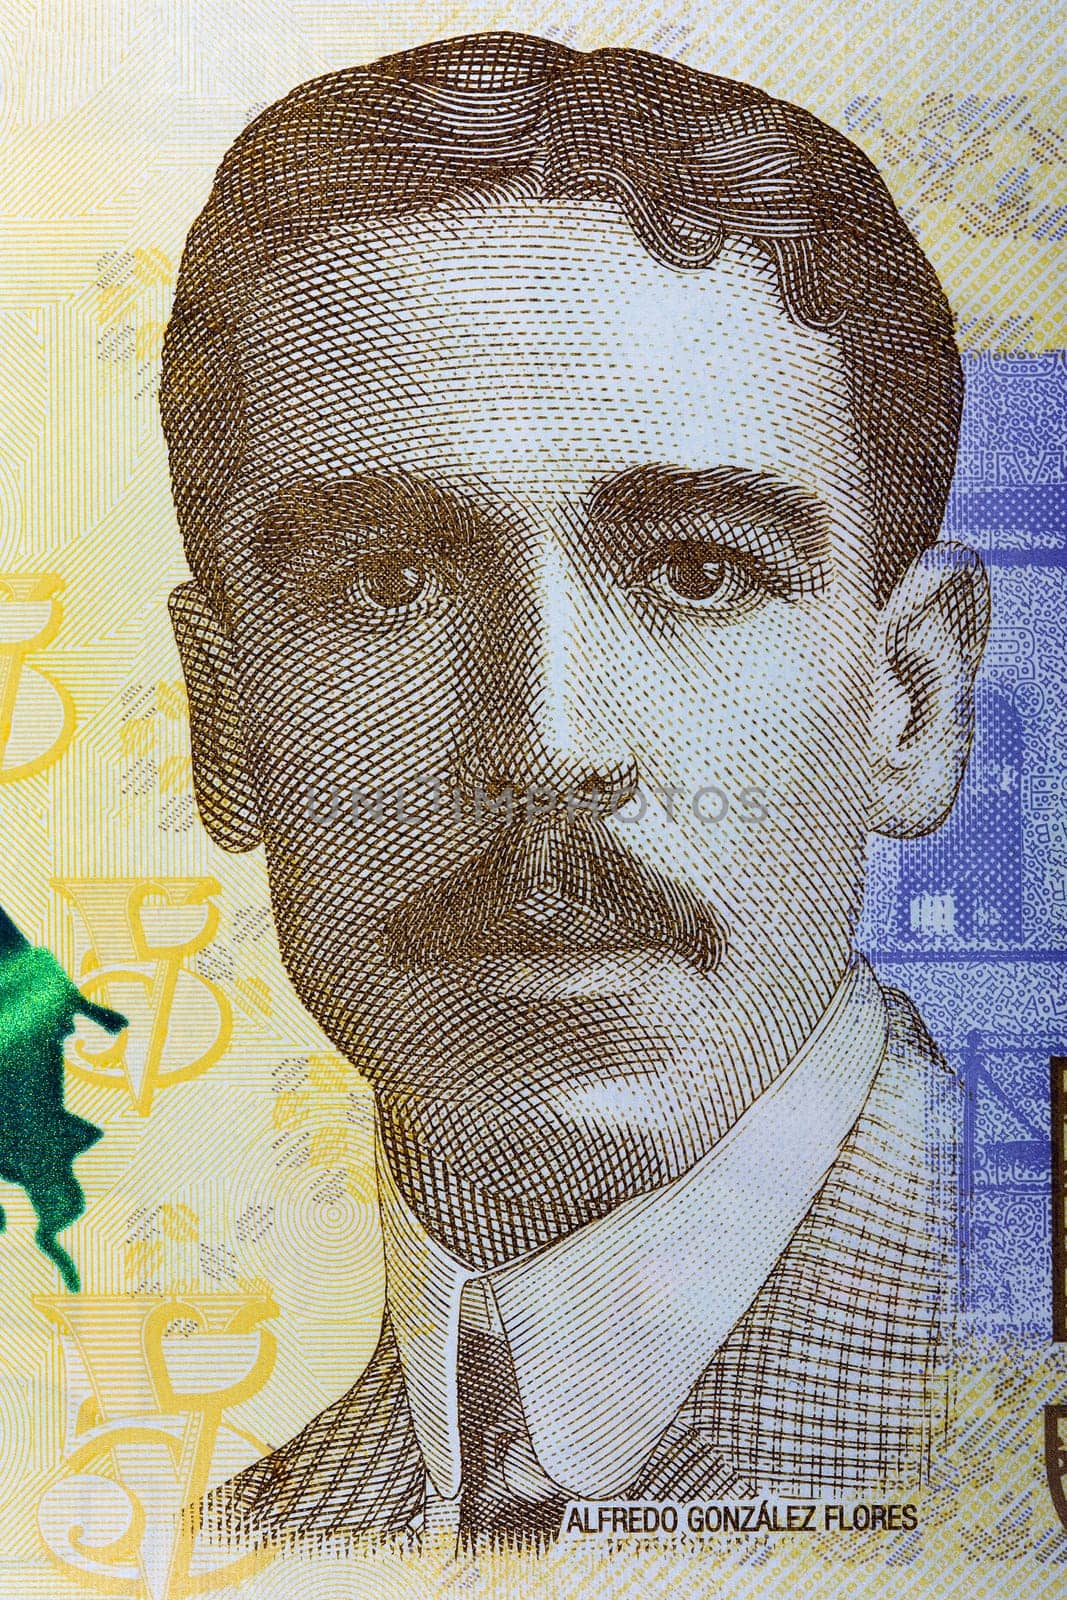 Alfredo Gonzalez Flores a portrait from Costa Rican money